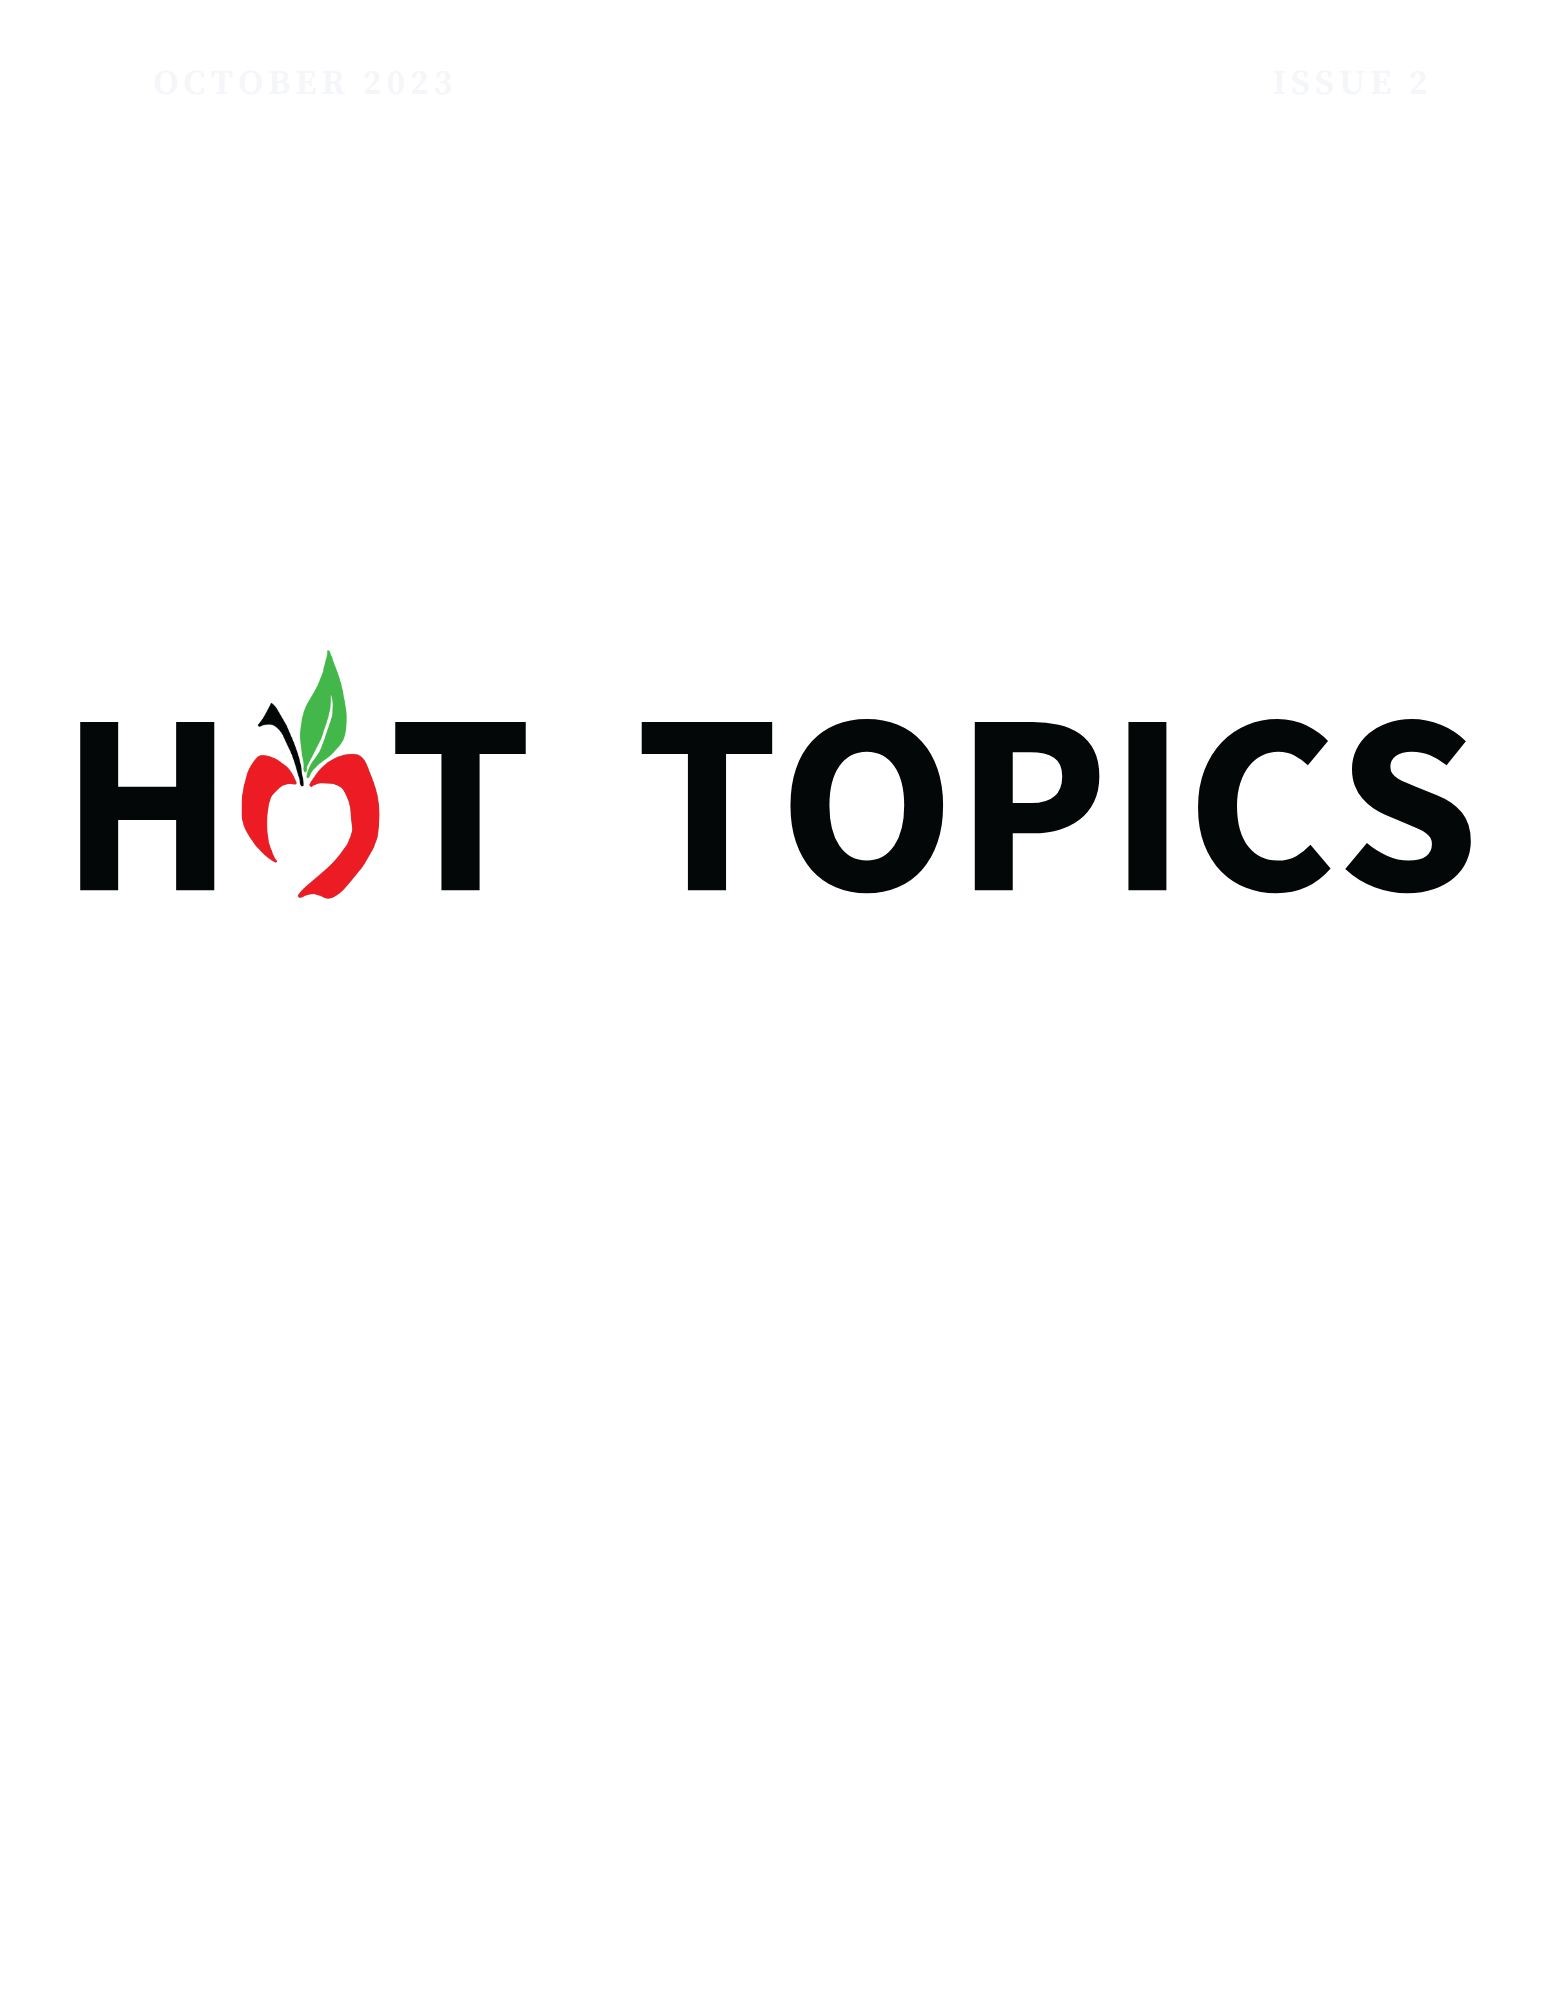 TABCO Hot Topics Template Cover (002)